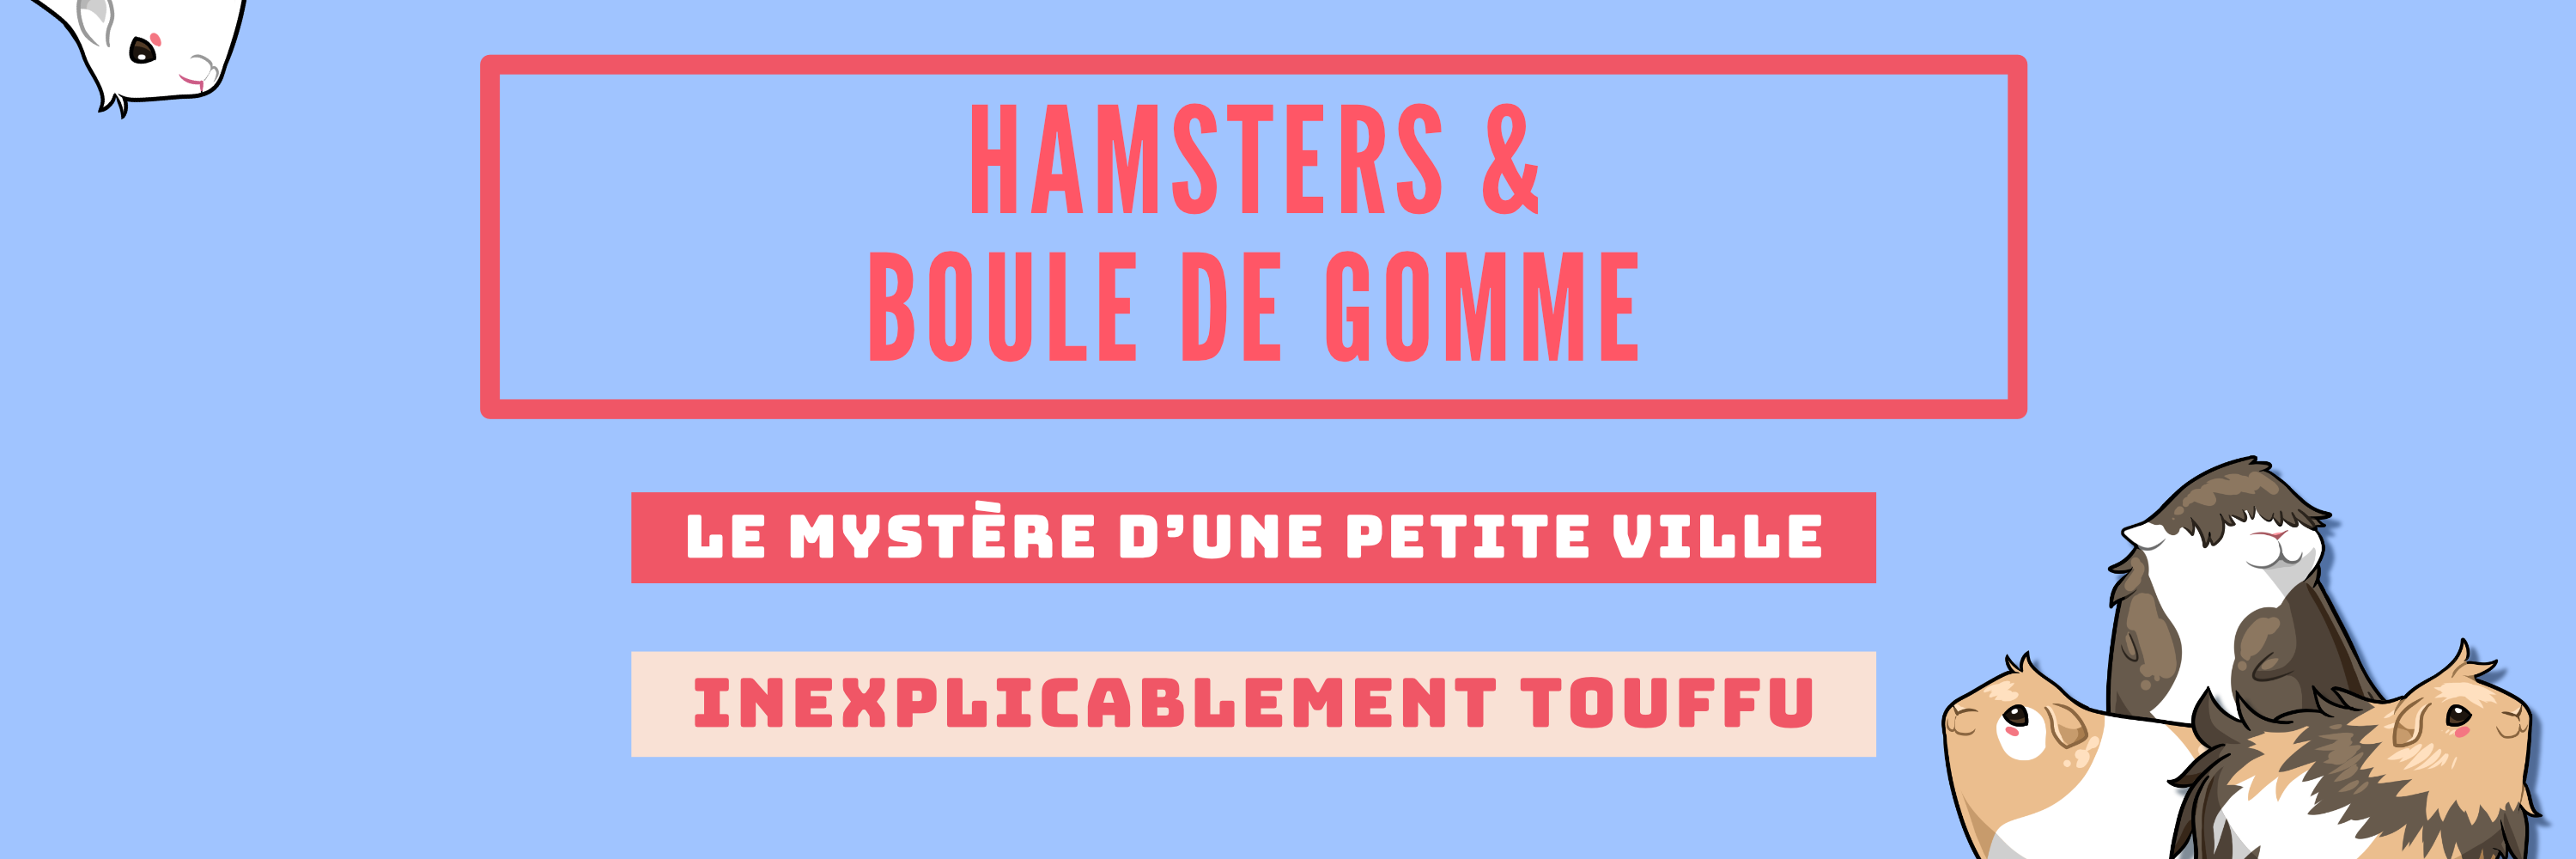 Hamsters & Boule de Gomme